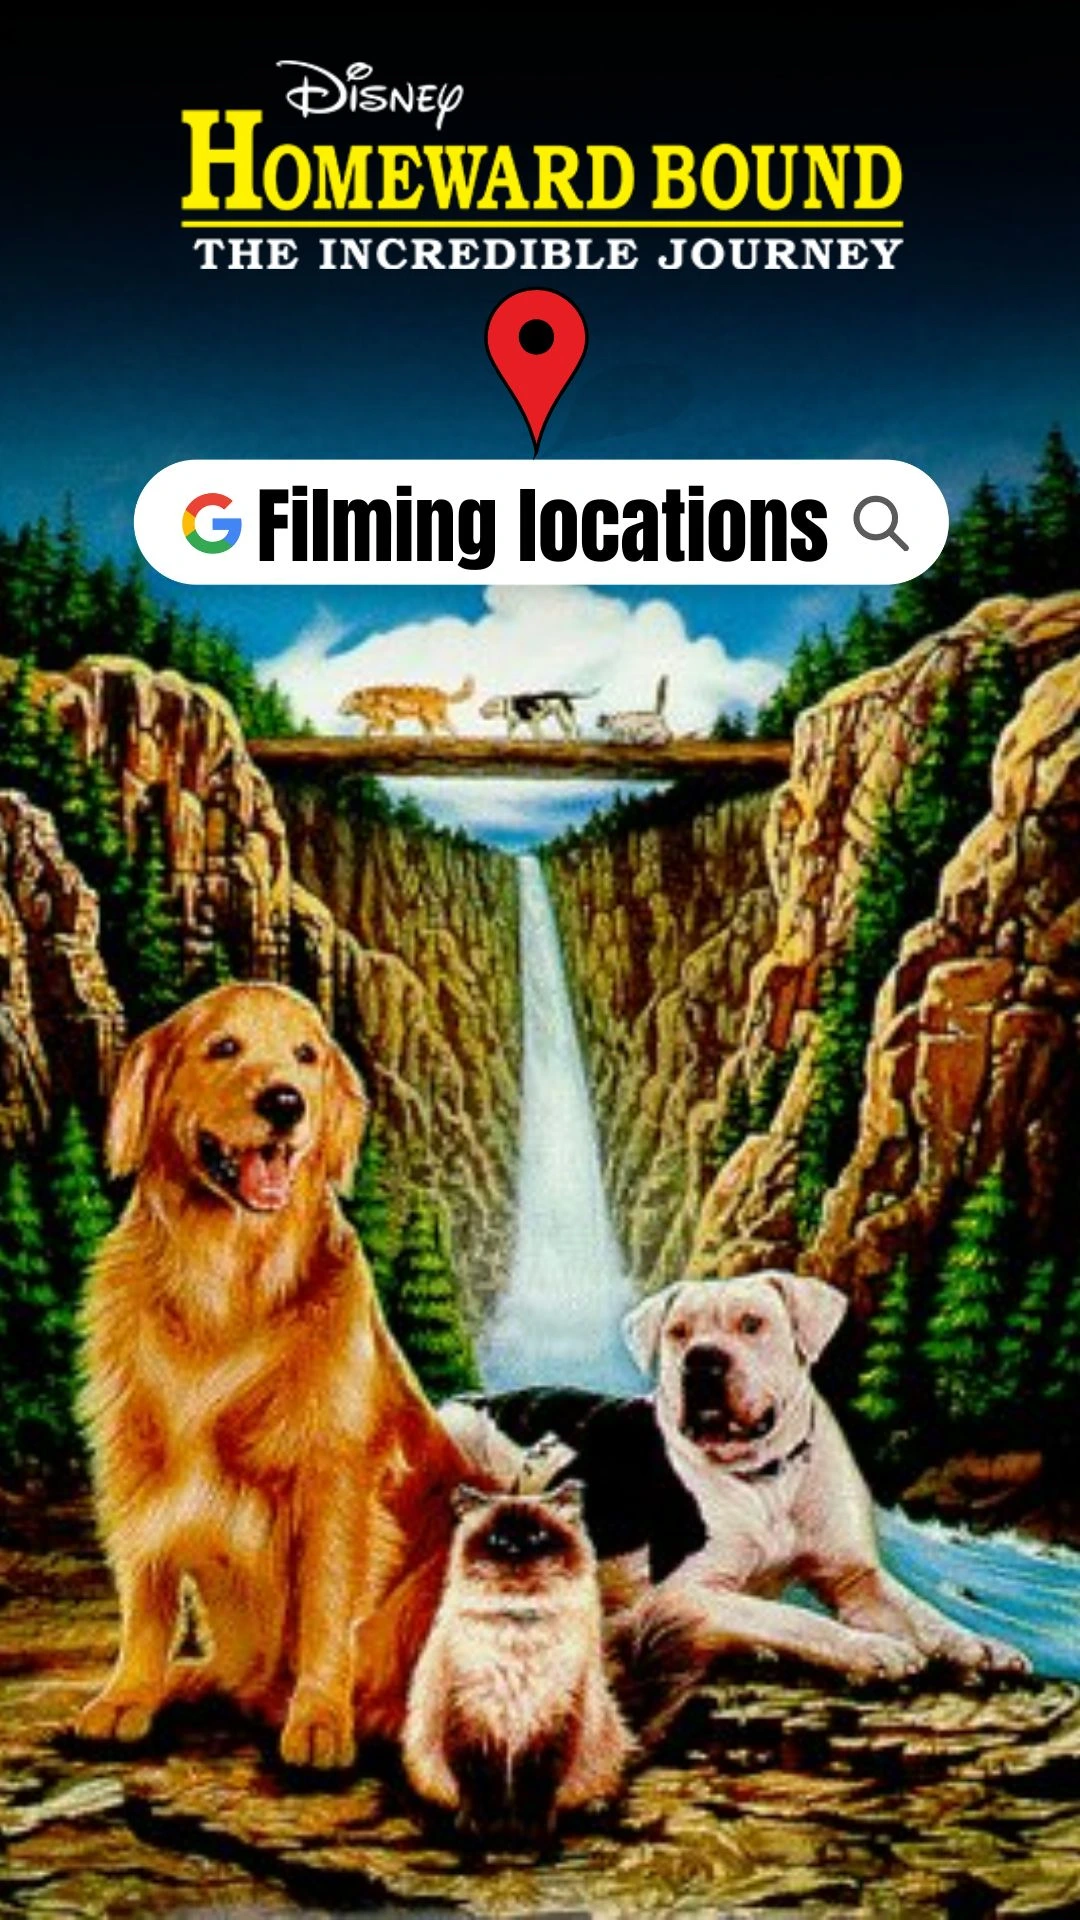 Homeward Bound filming locations (1993)